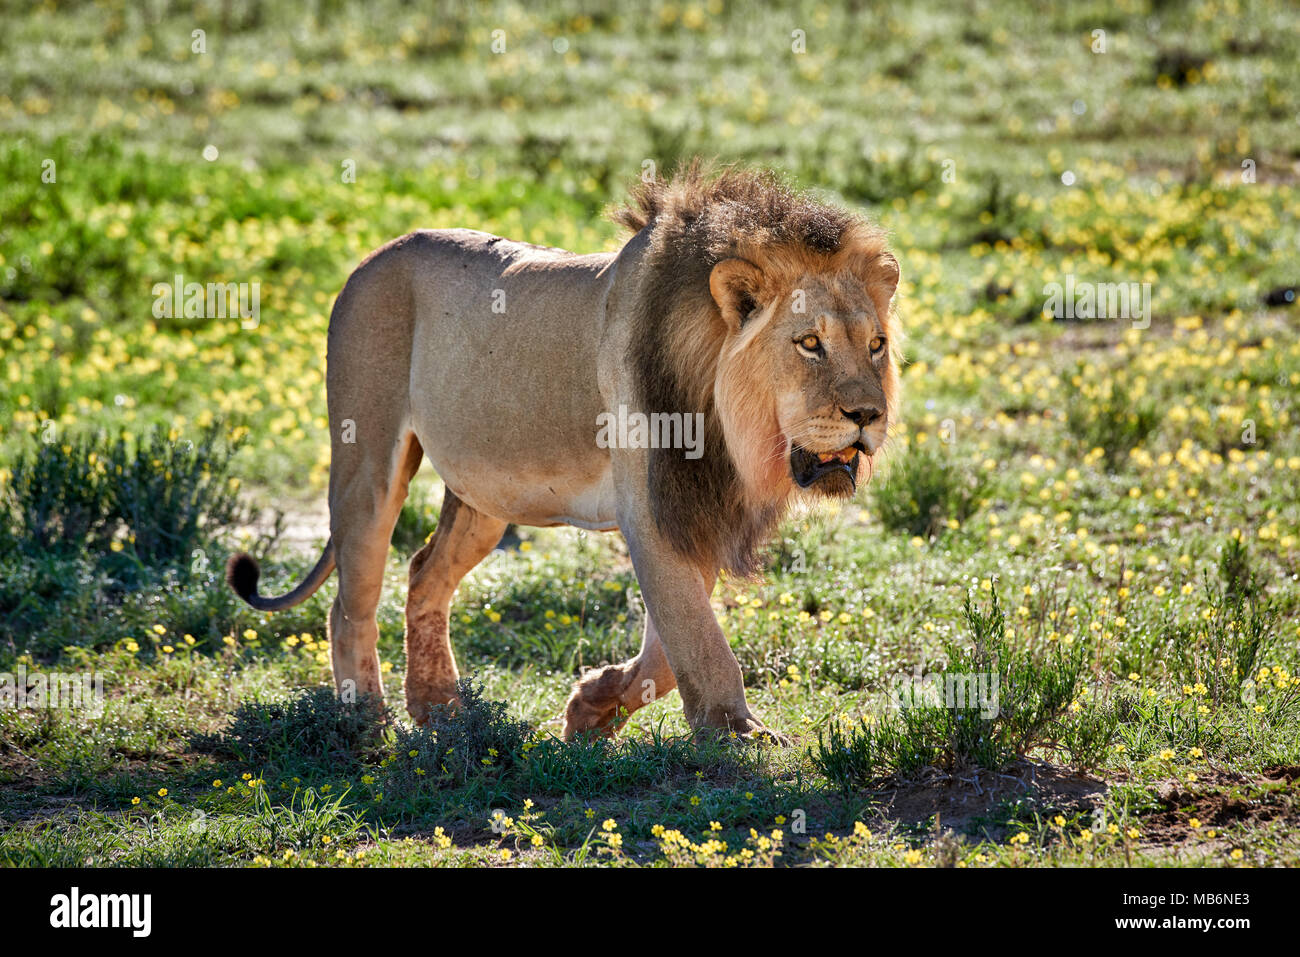 Maschio patroling lion del suo territorio, Panthera leo, Kgalagadi Parco transfrontaliero, Sud Africa e Africa Foto Stock